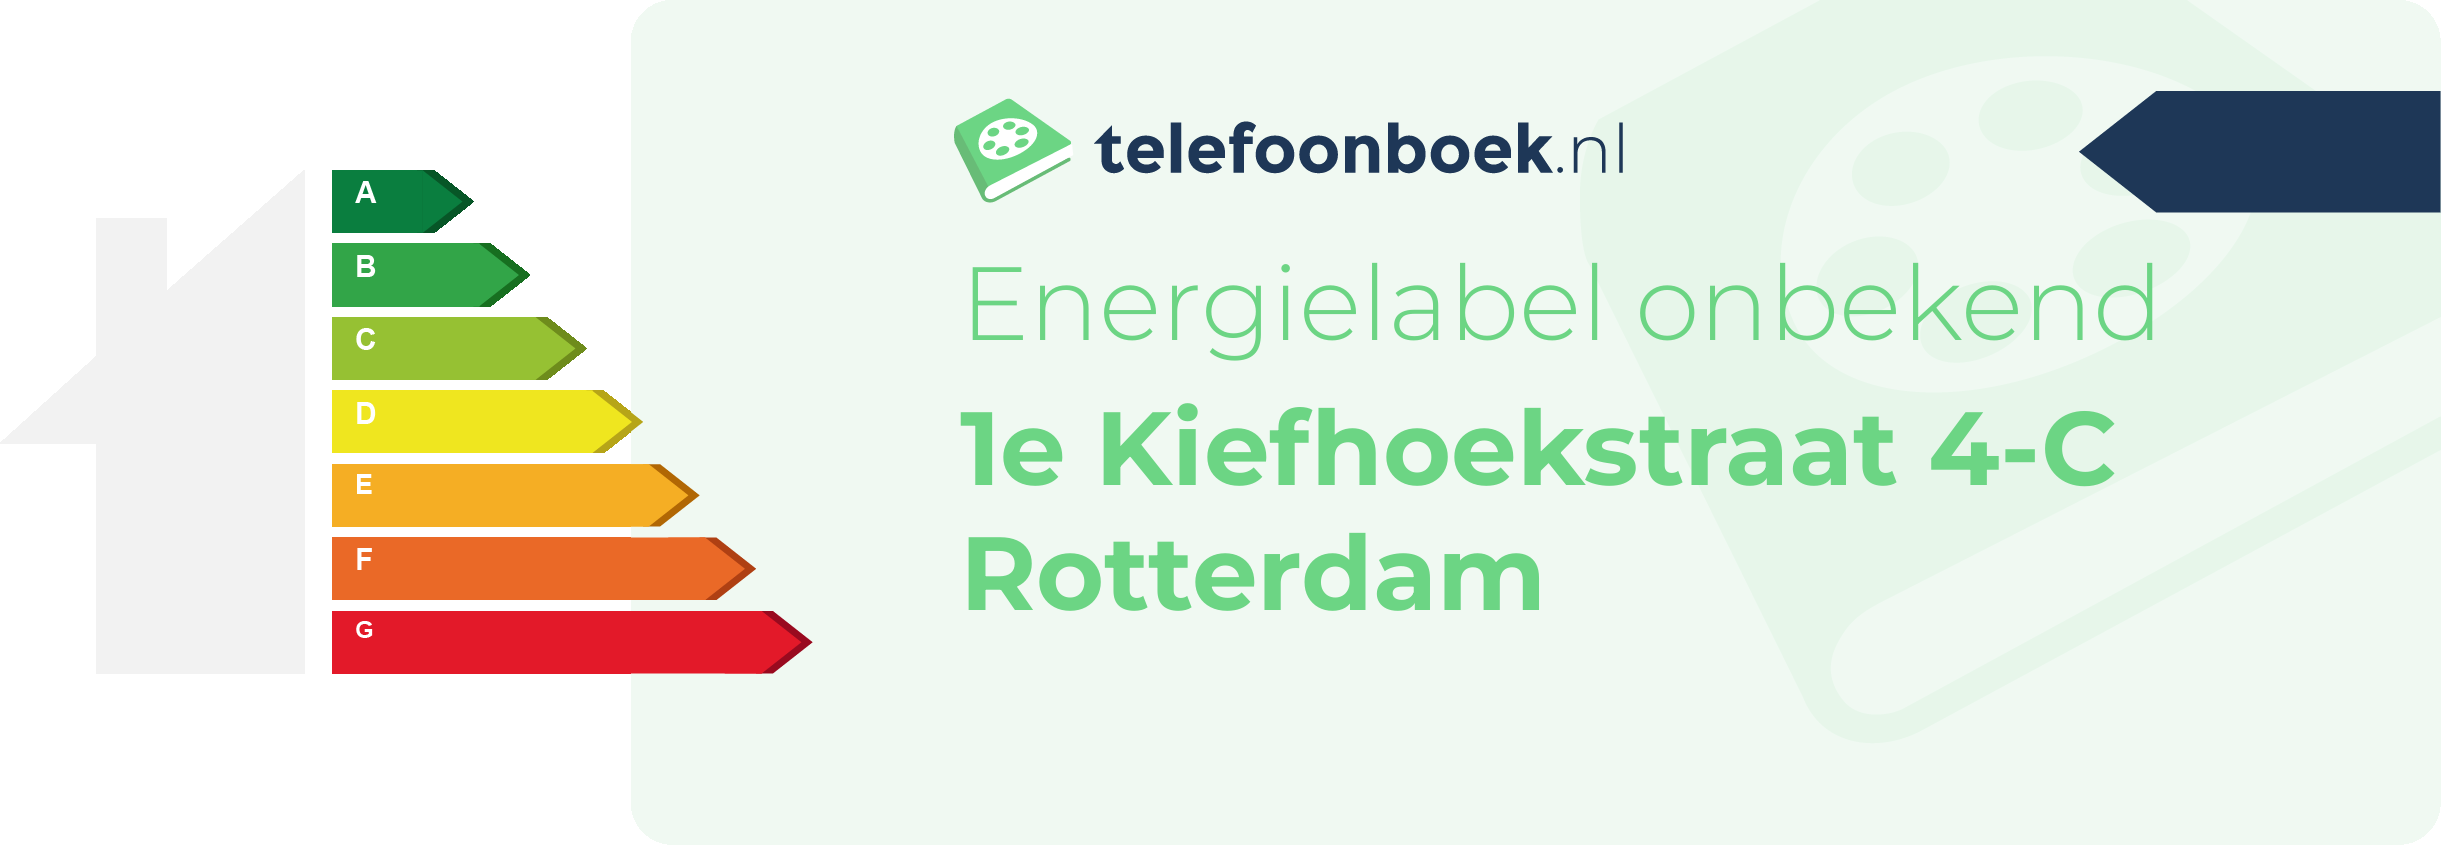 Energielabel 1e Kiefhoekstraat 4-C Rotterdam